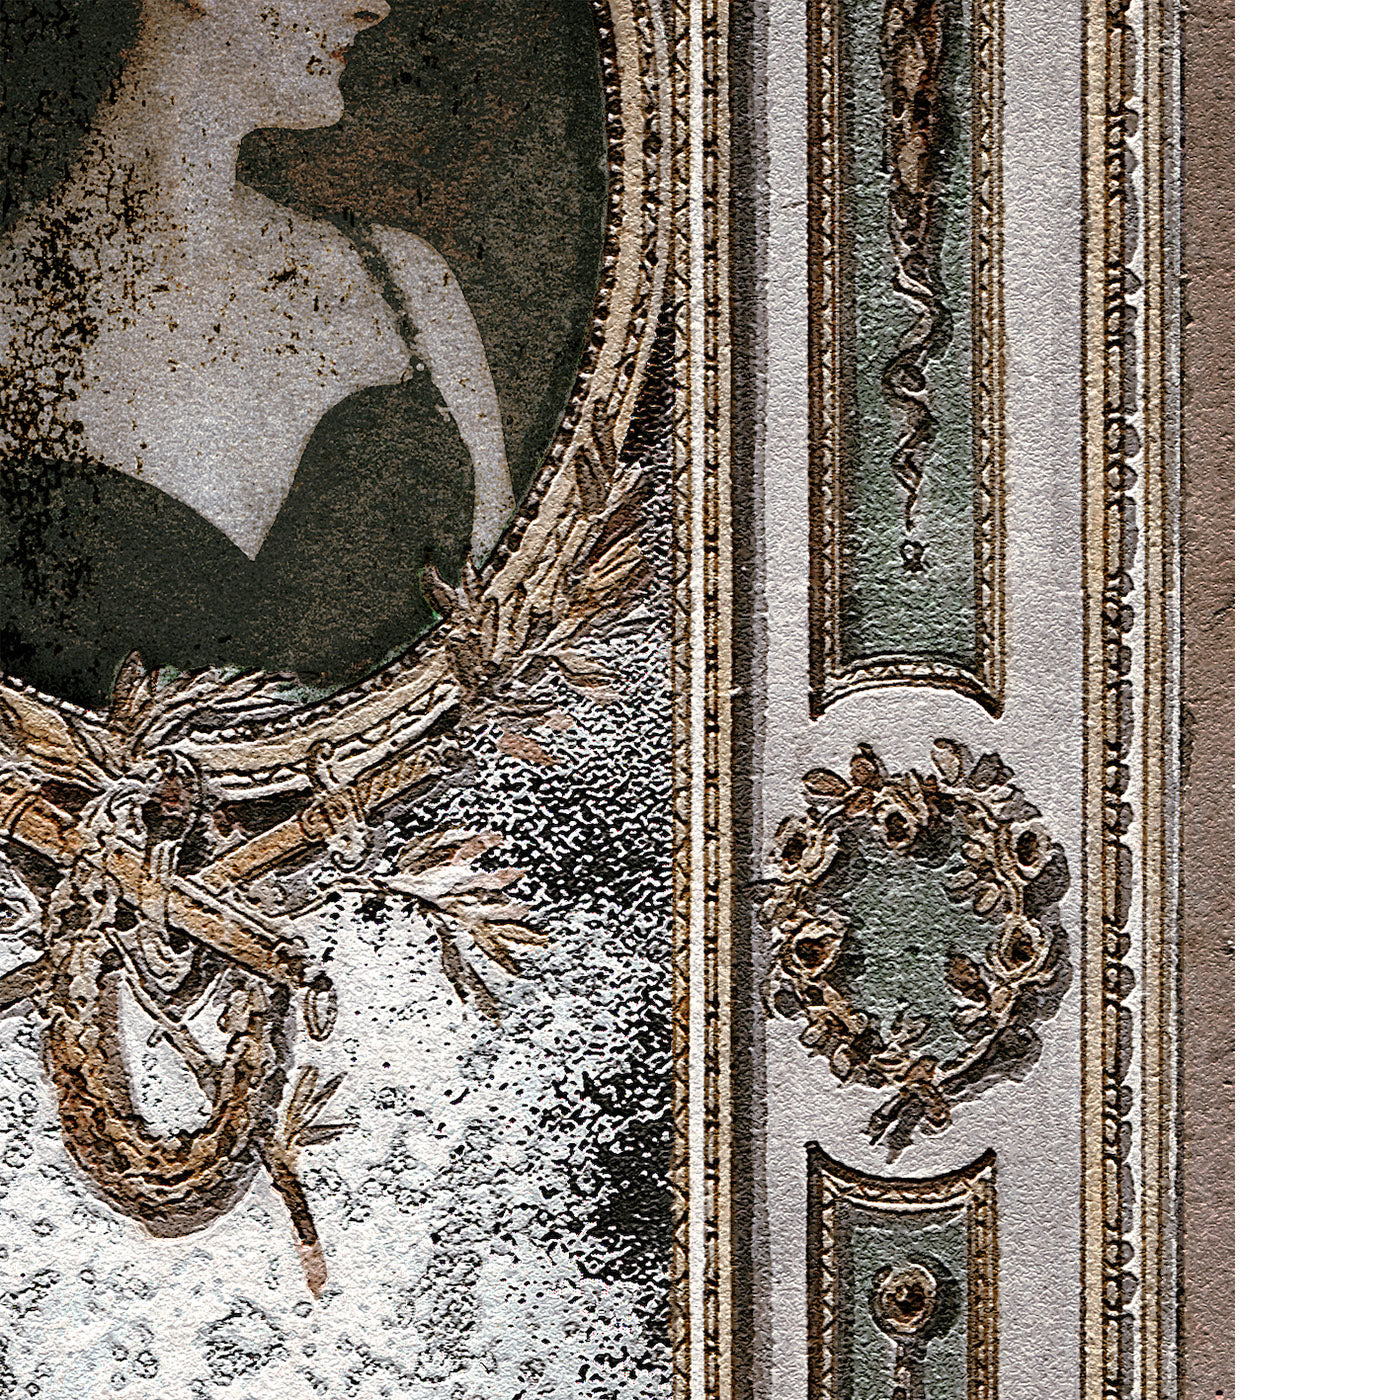 Barocco Decorative Panel #1 by Studio Abitadecò - Alternative view 1